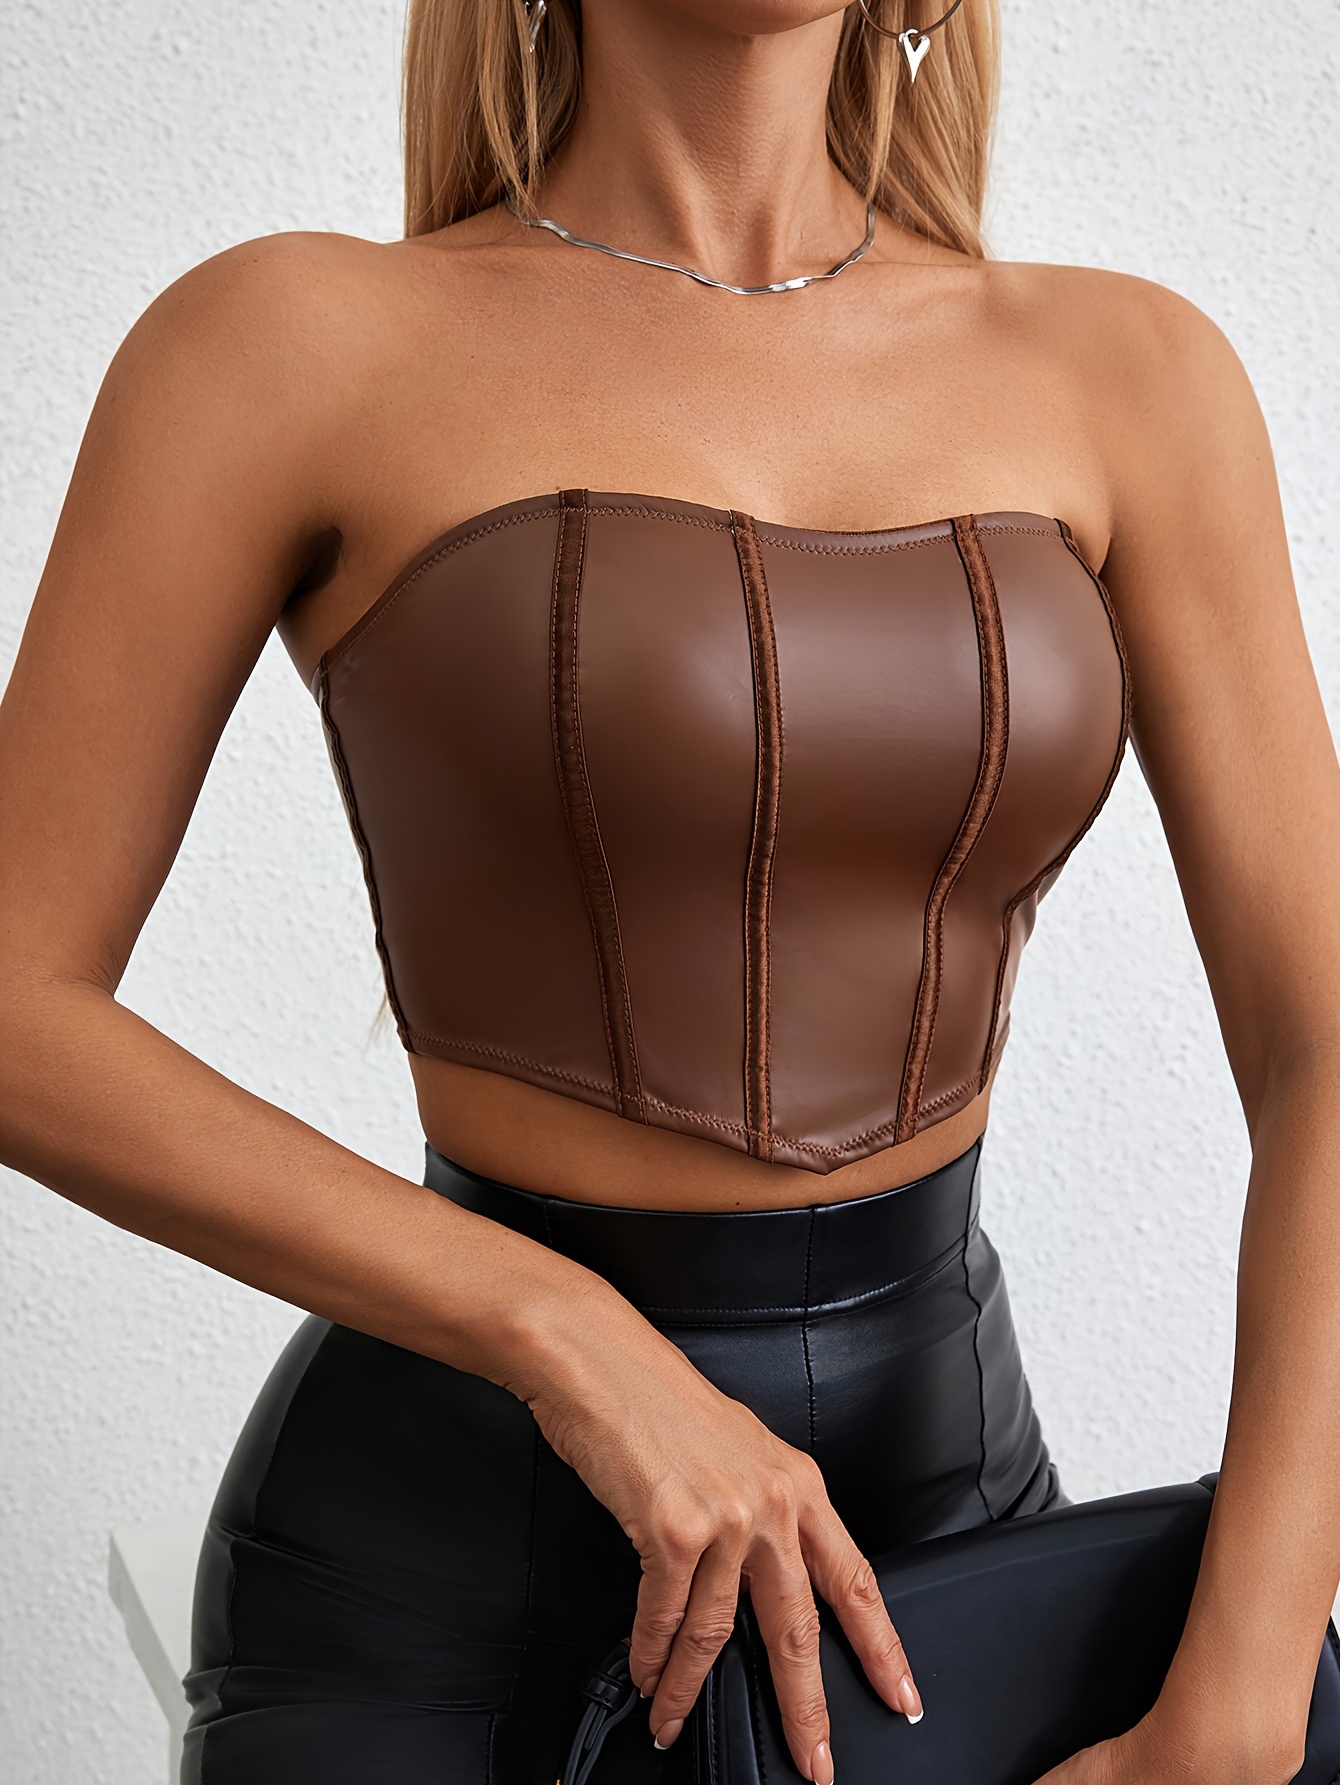 Club Topswomen's Pu Leather Corset Top - Sexy Clubwear Bustier Crop